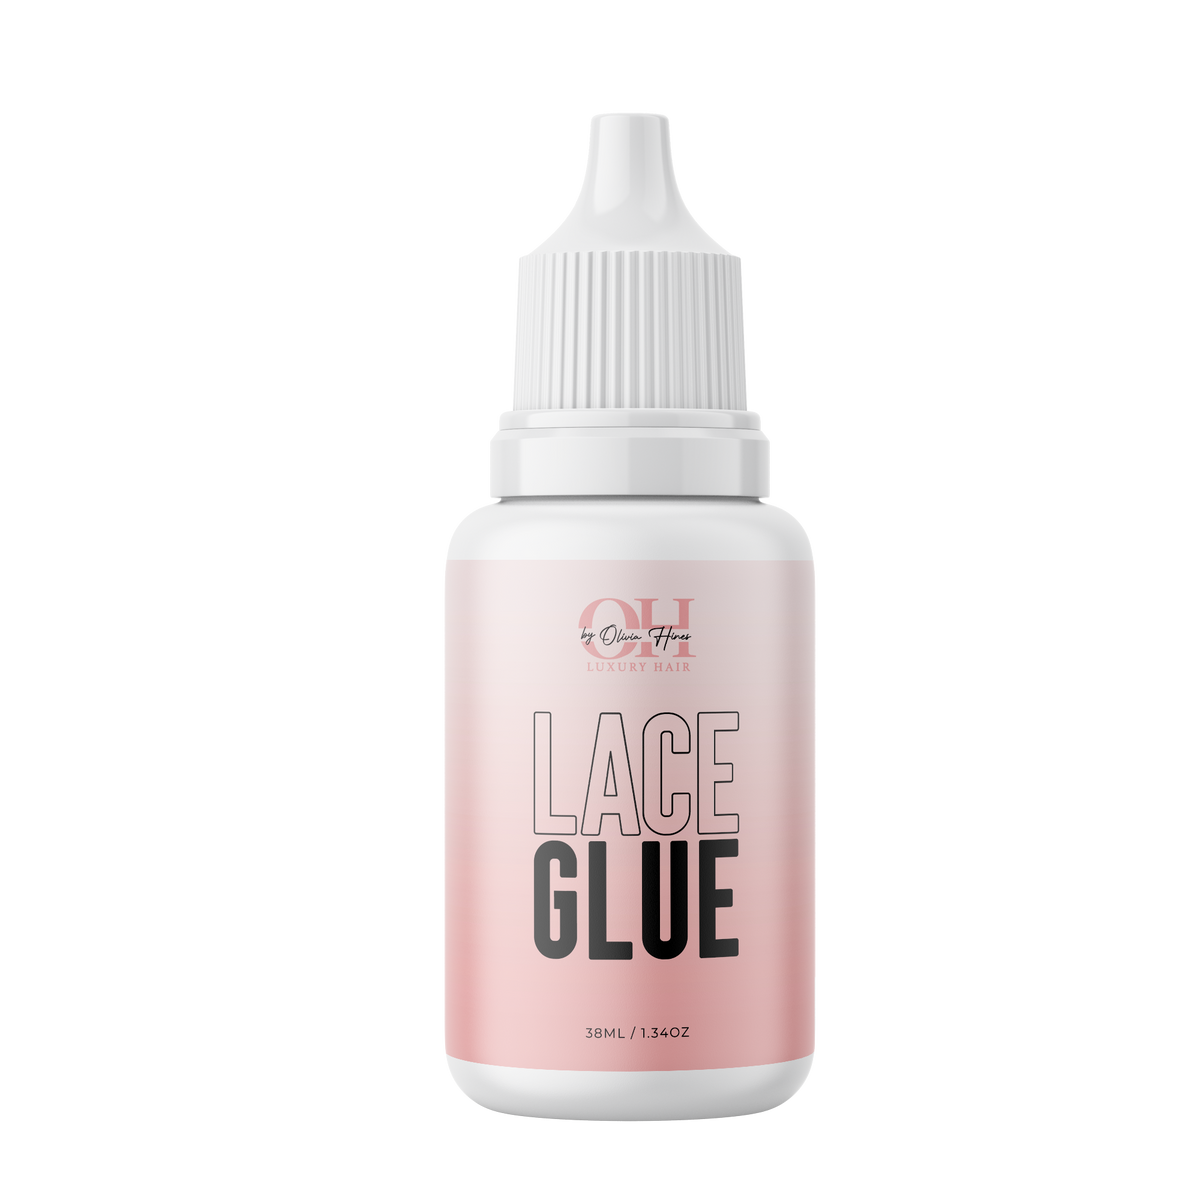 Wig Lace Glue